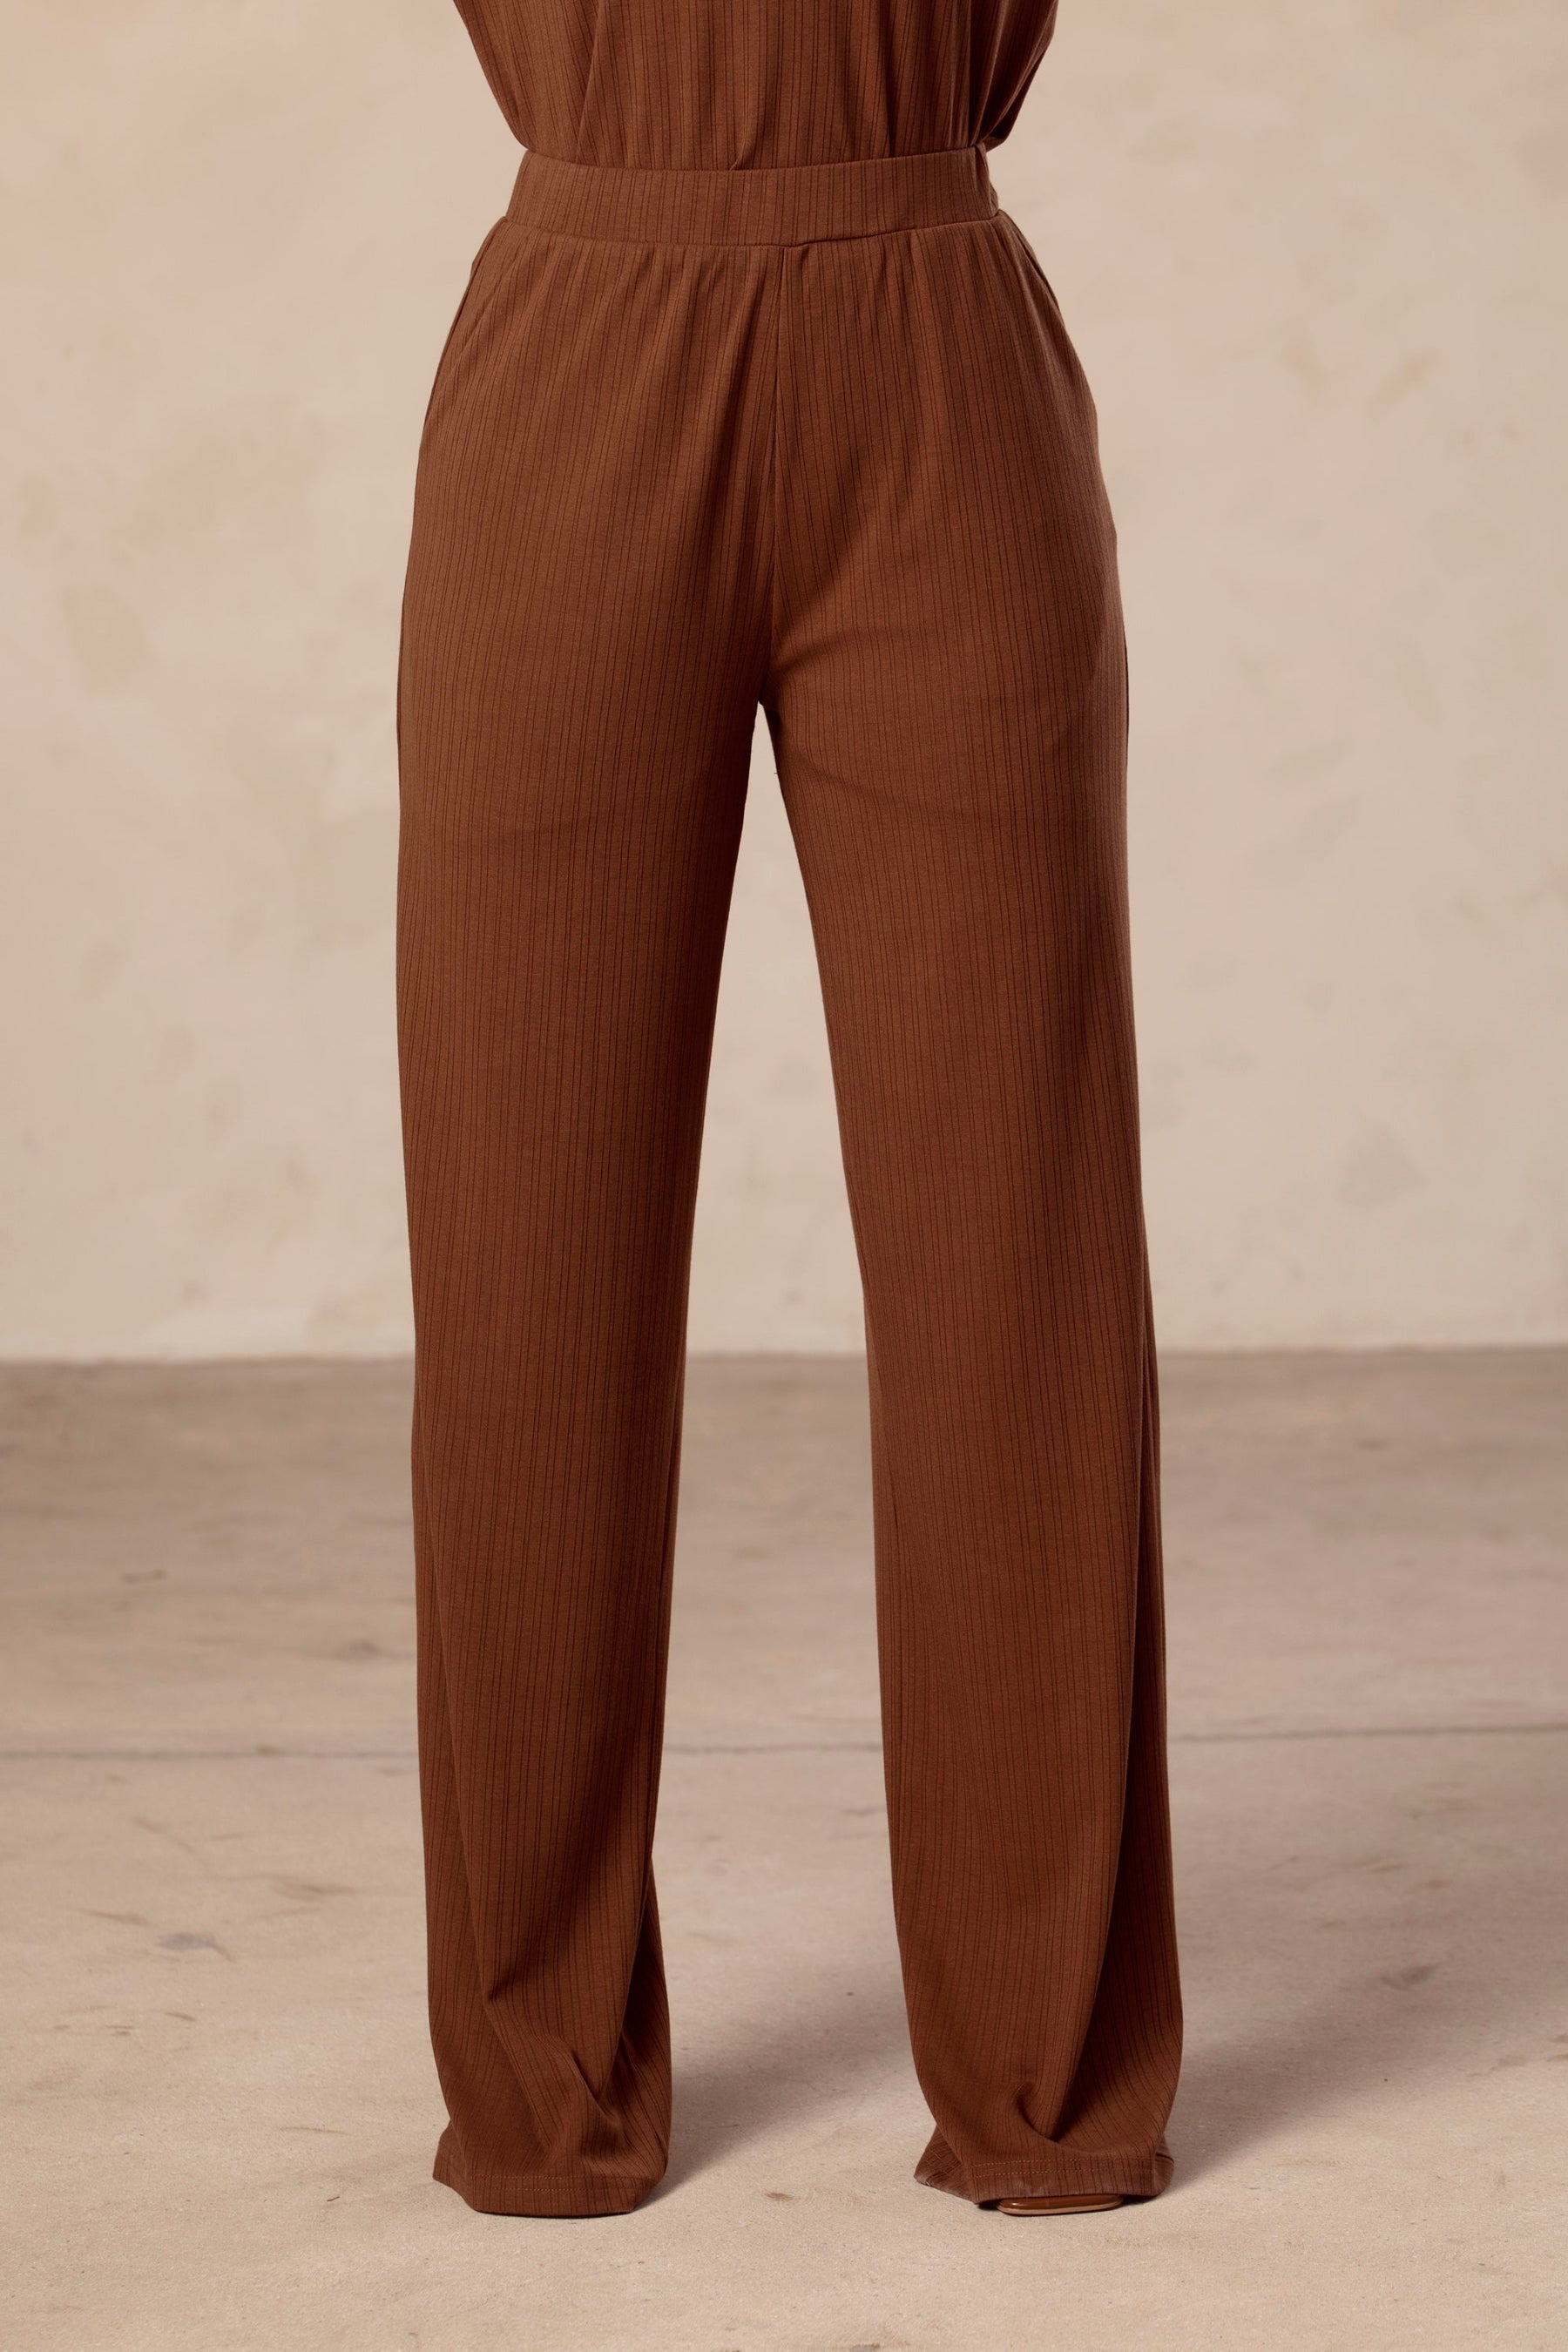 Hannah Ribbed Tunic & Pants Matching Set - Chocolate Brown epschoolboard 